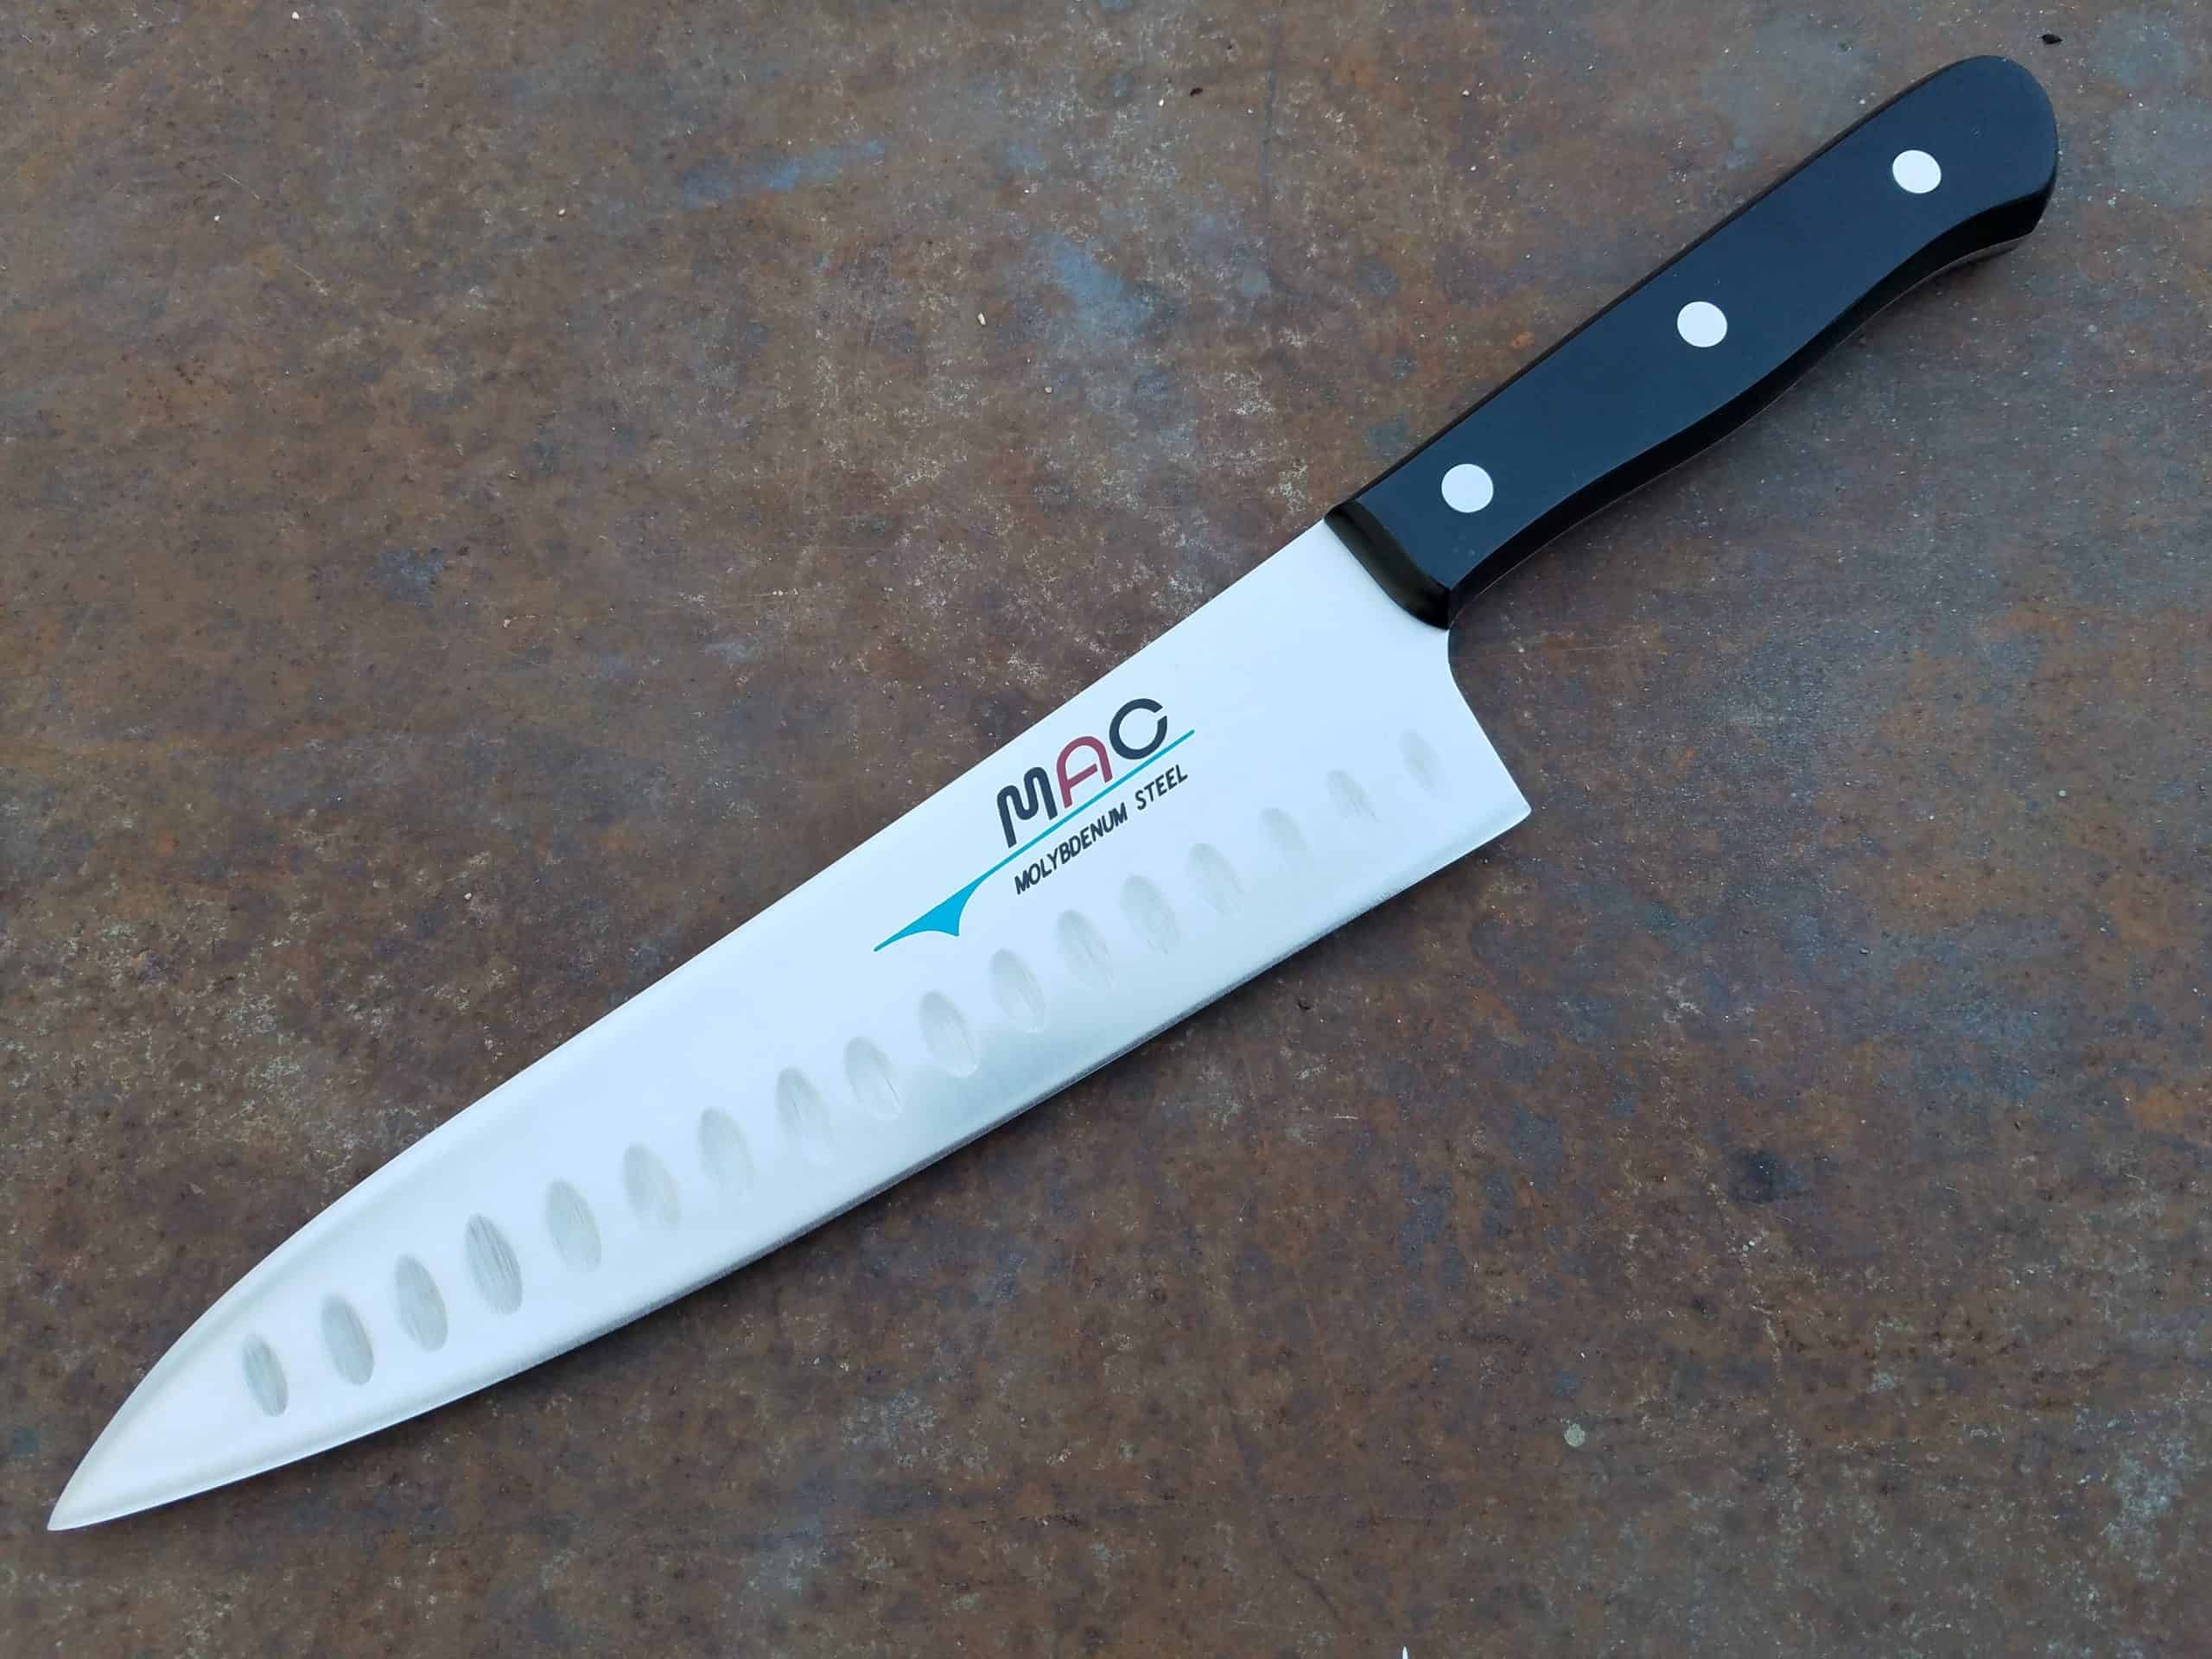 Mac Knife Review